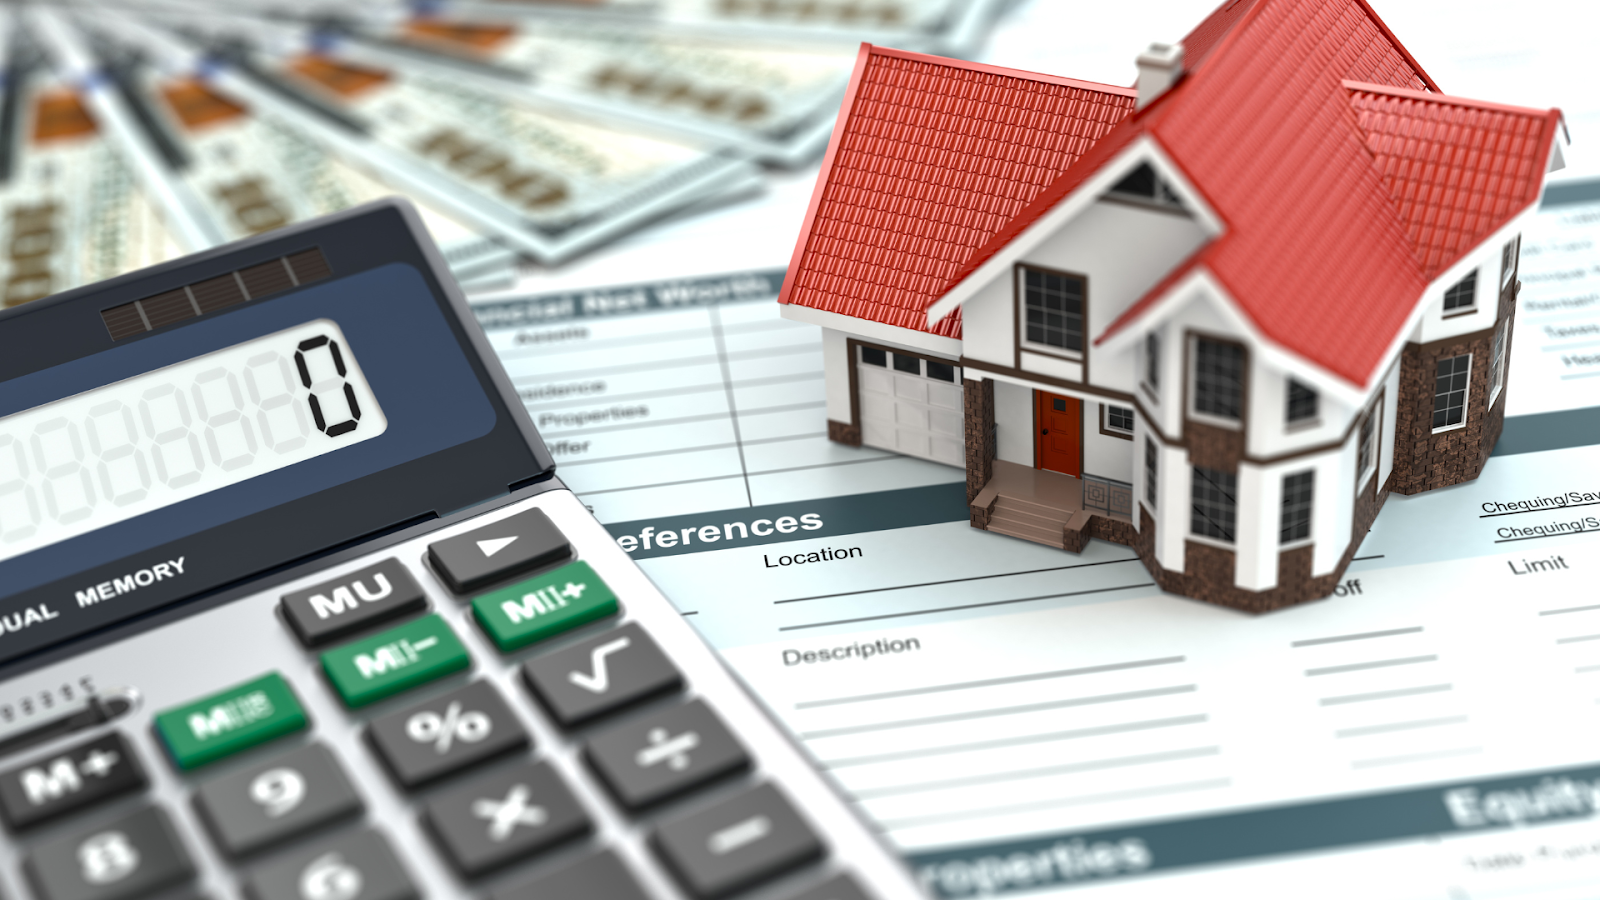 finance mortgage advice